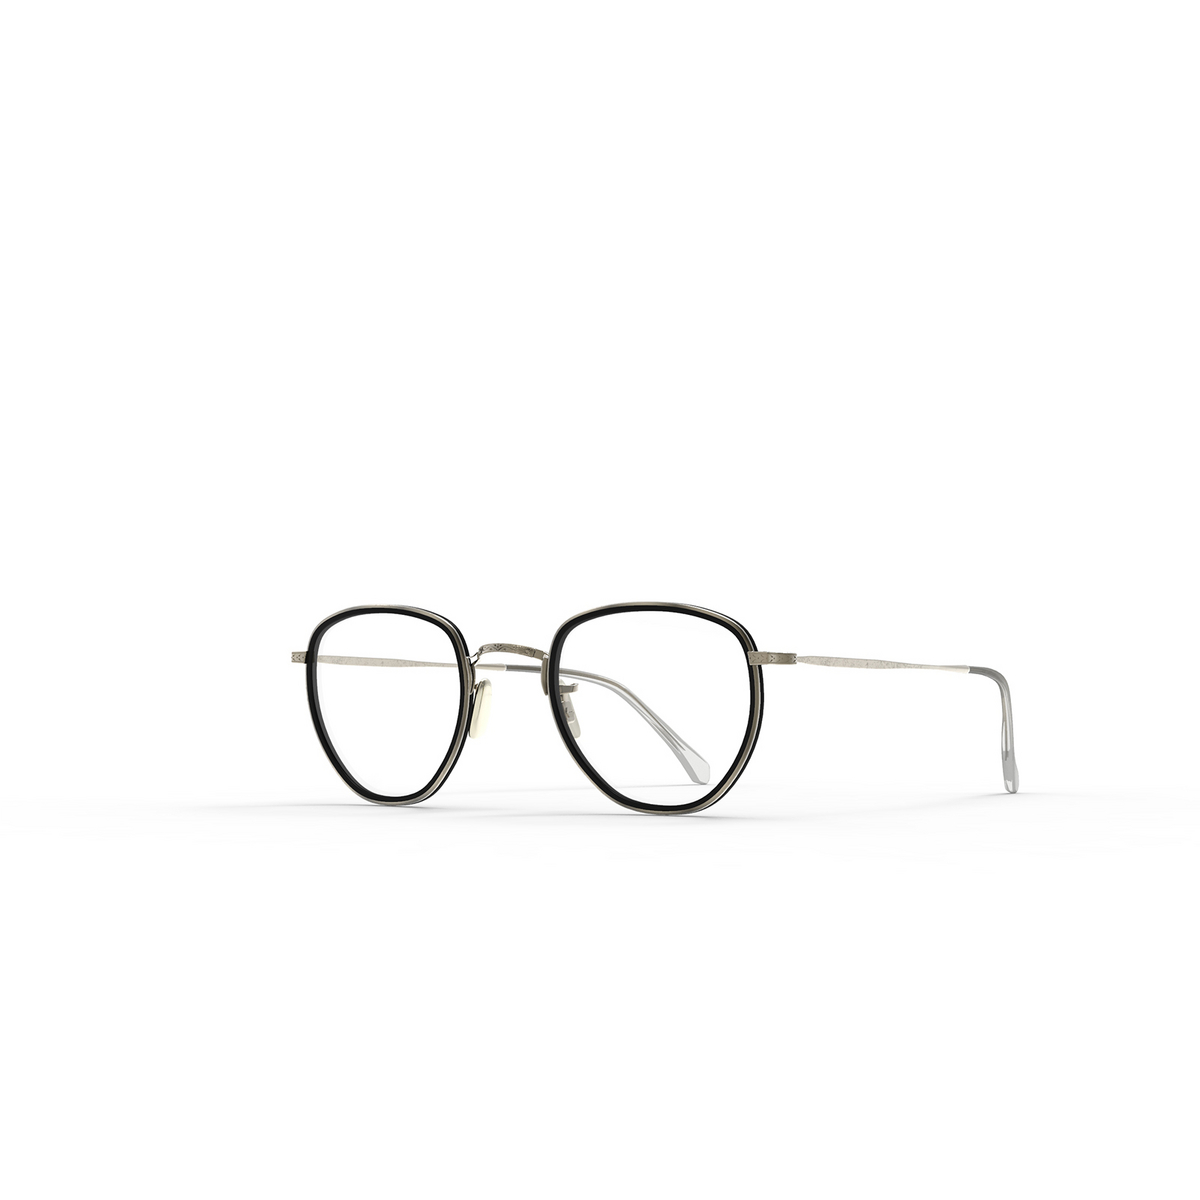 Mr. Leight ROKU C Eyeglasses MBK-ATG Matte Black-Antique Gold - three-quarters view